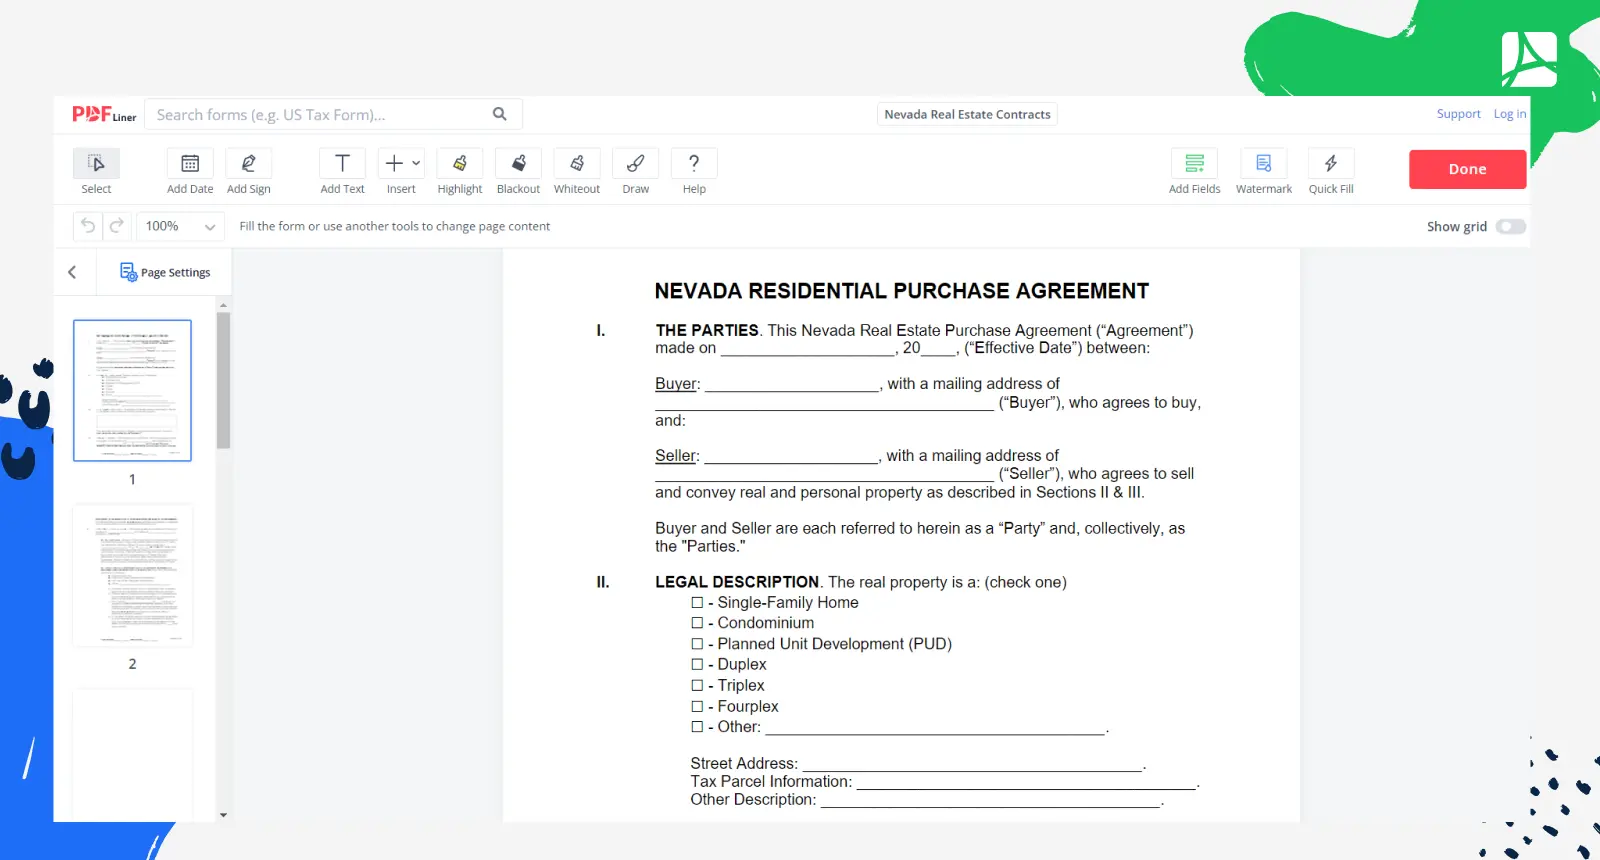 Nevada Real Estate Contract Form Screenshot